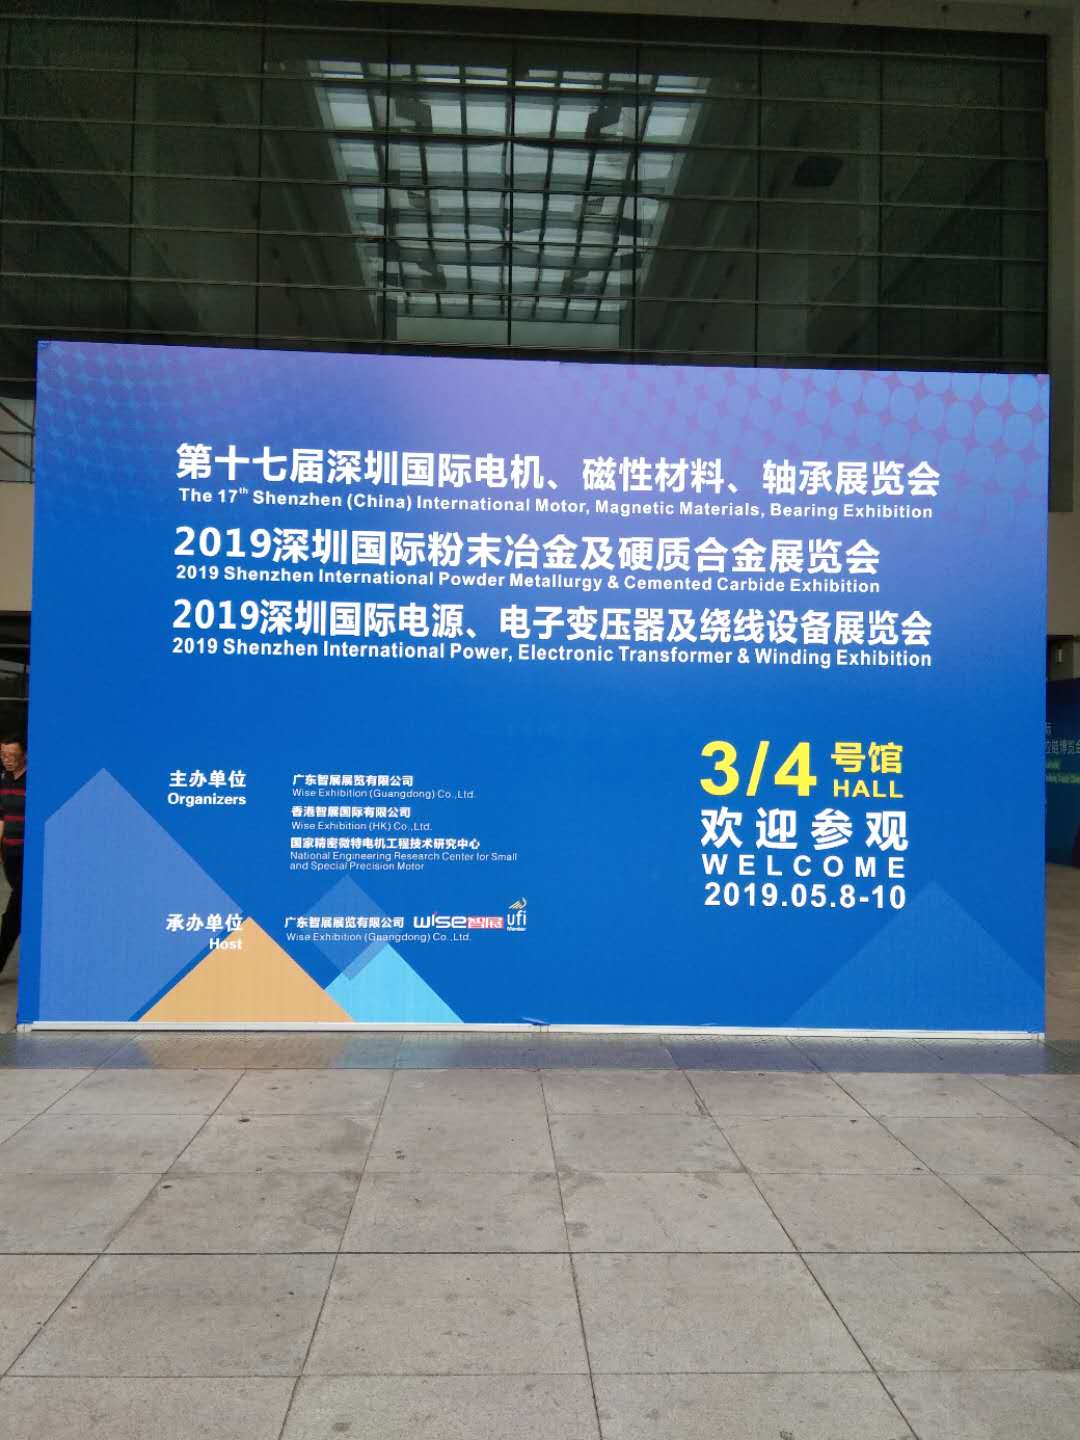 The 17th Shenzhen International Motor Show